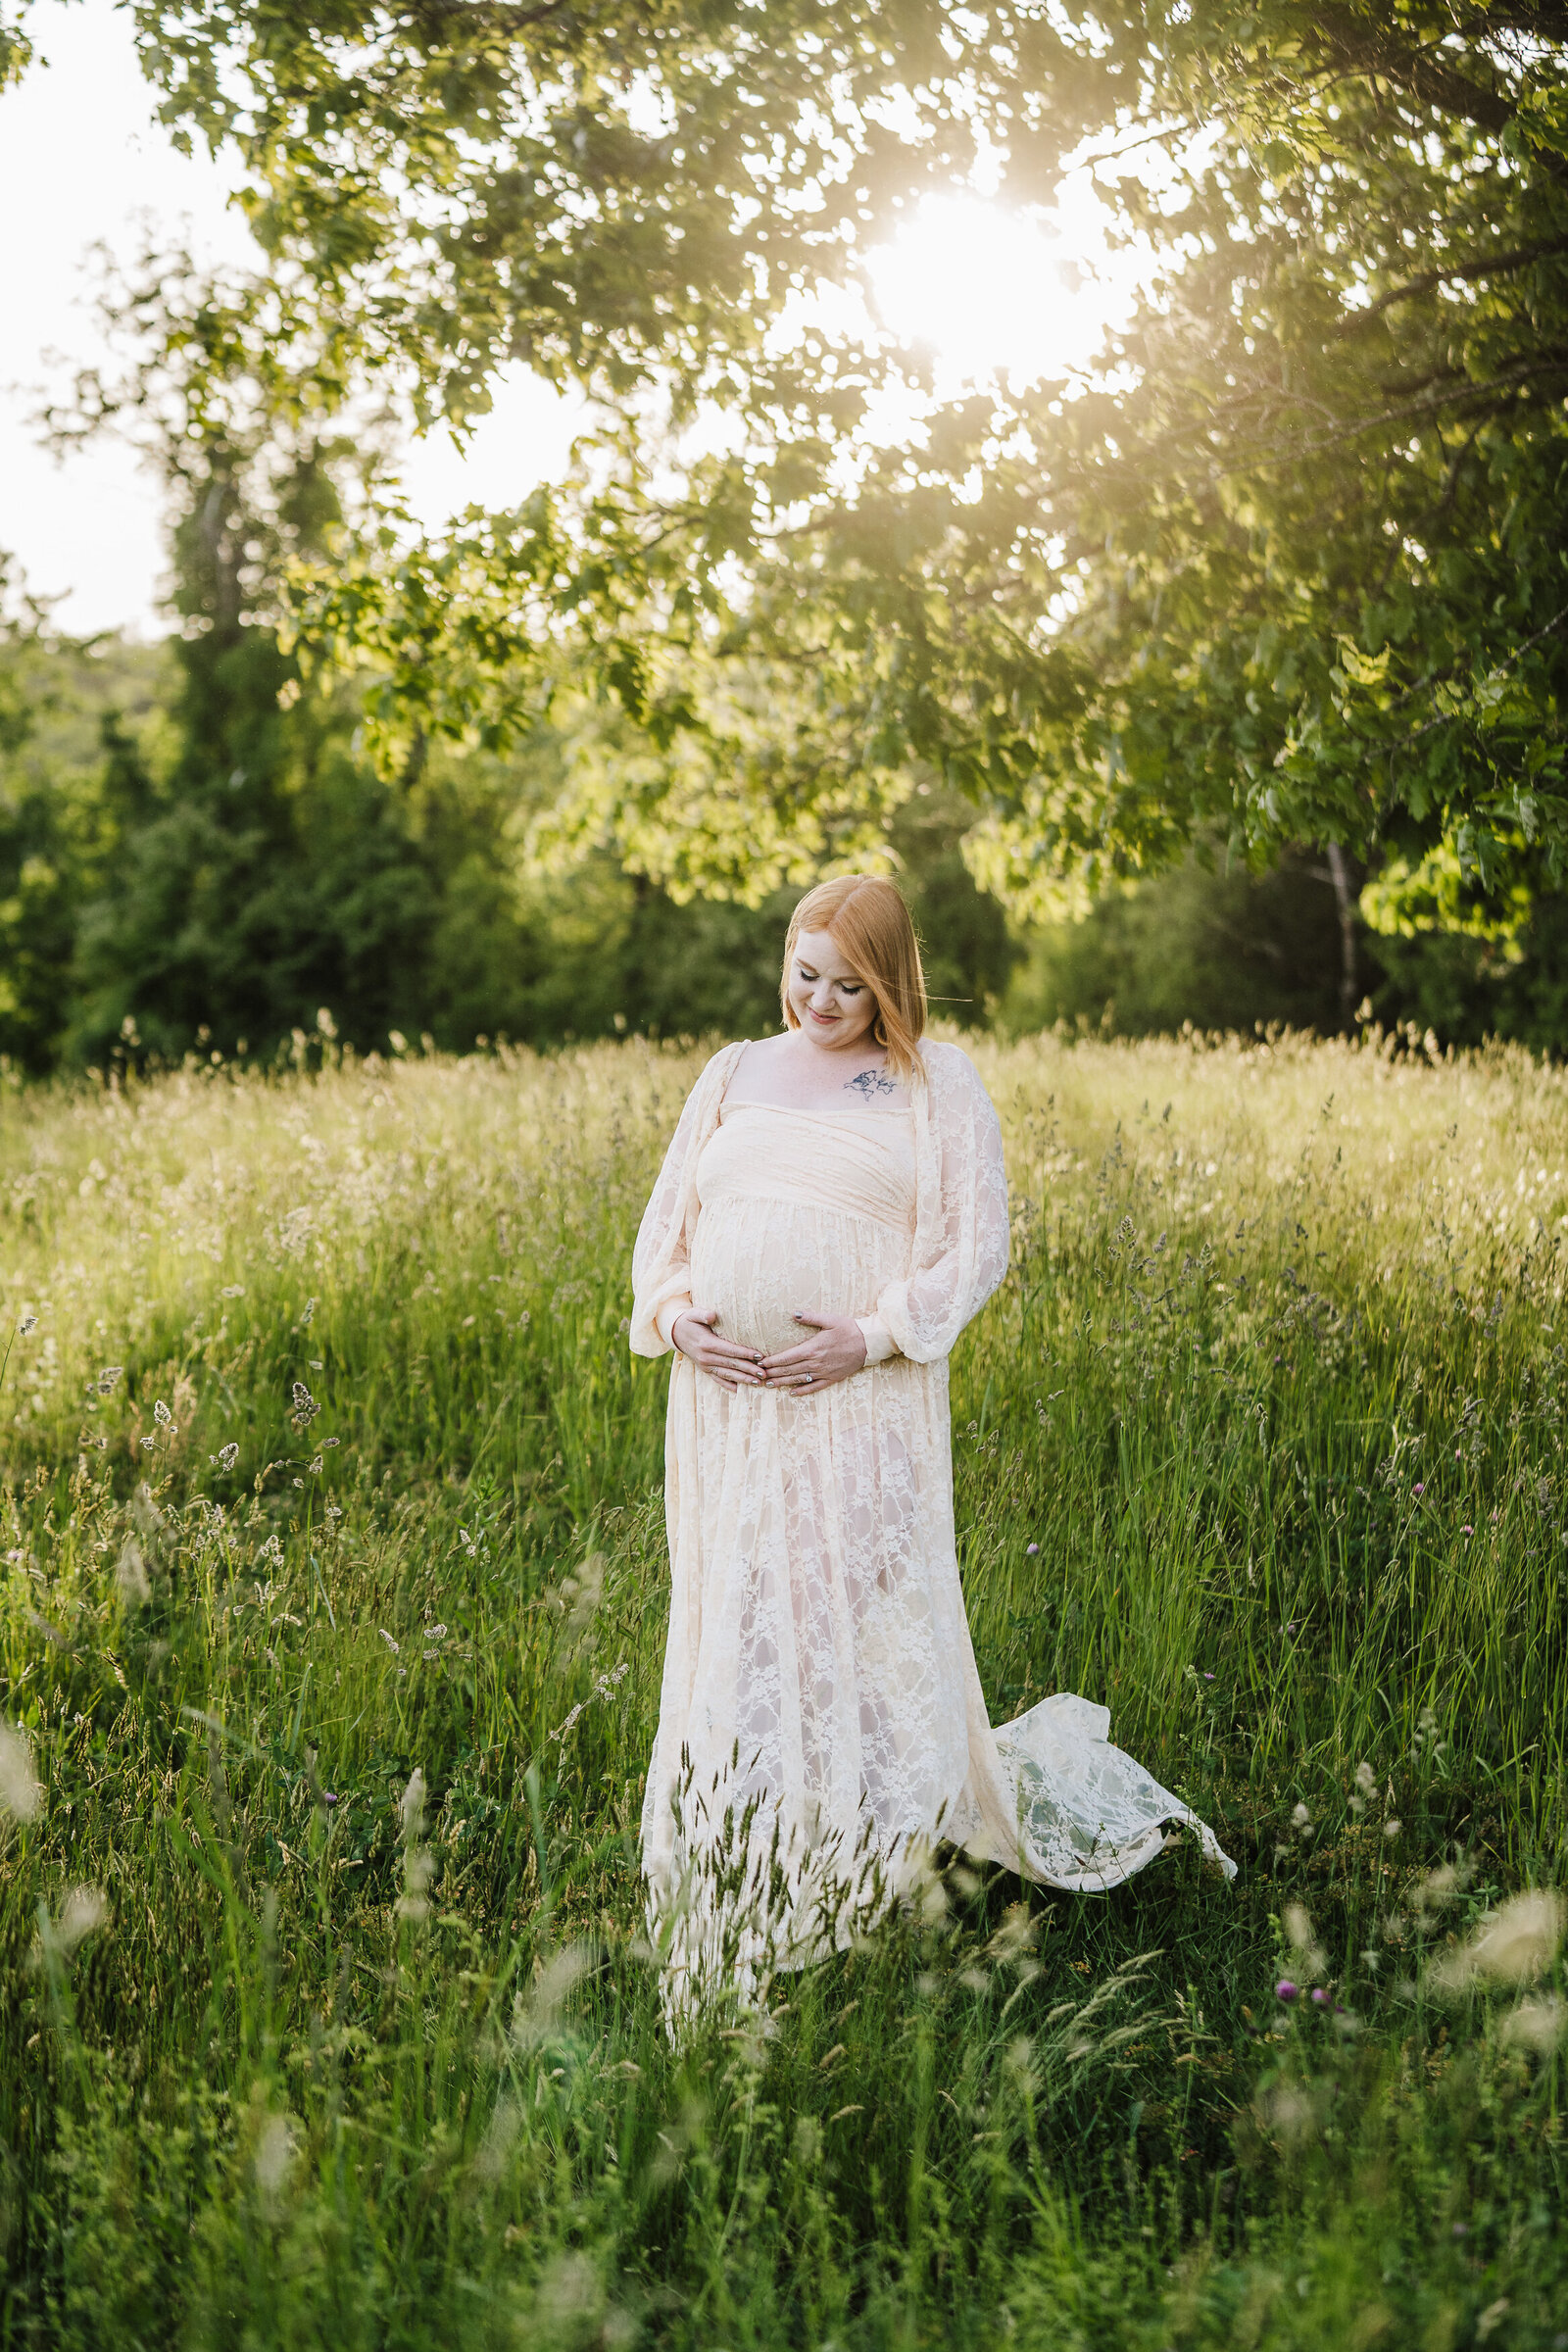 pregnant woman in lace dress in green field